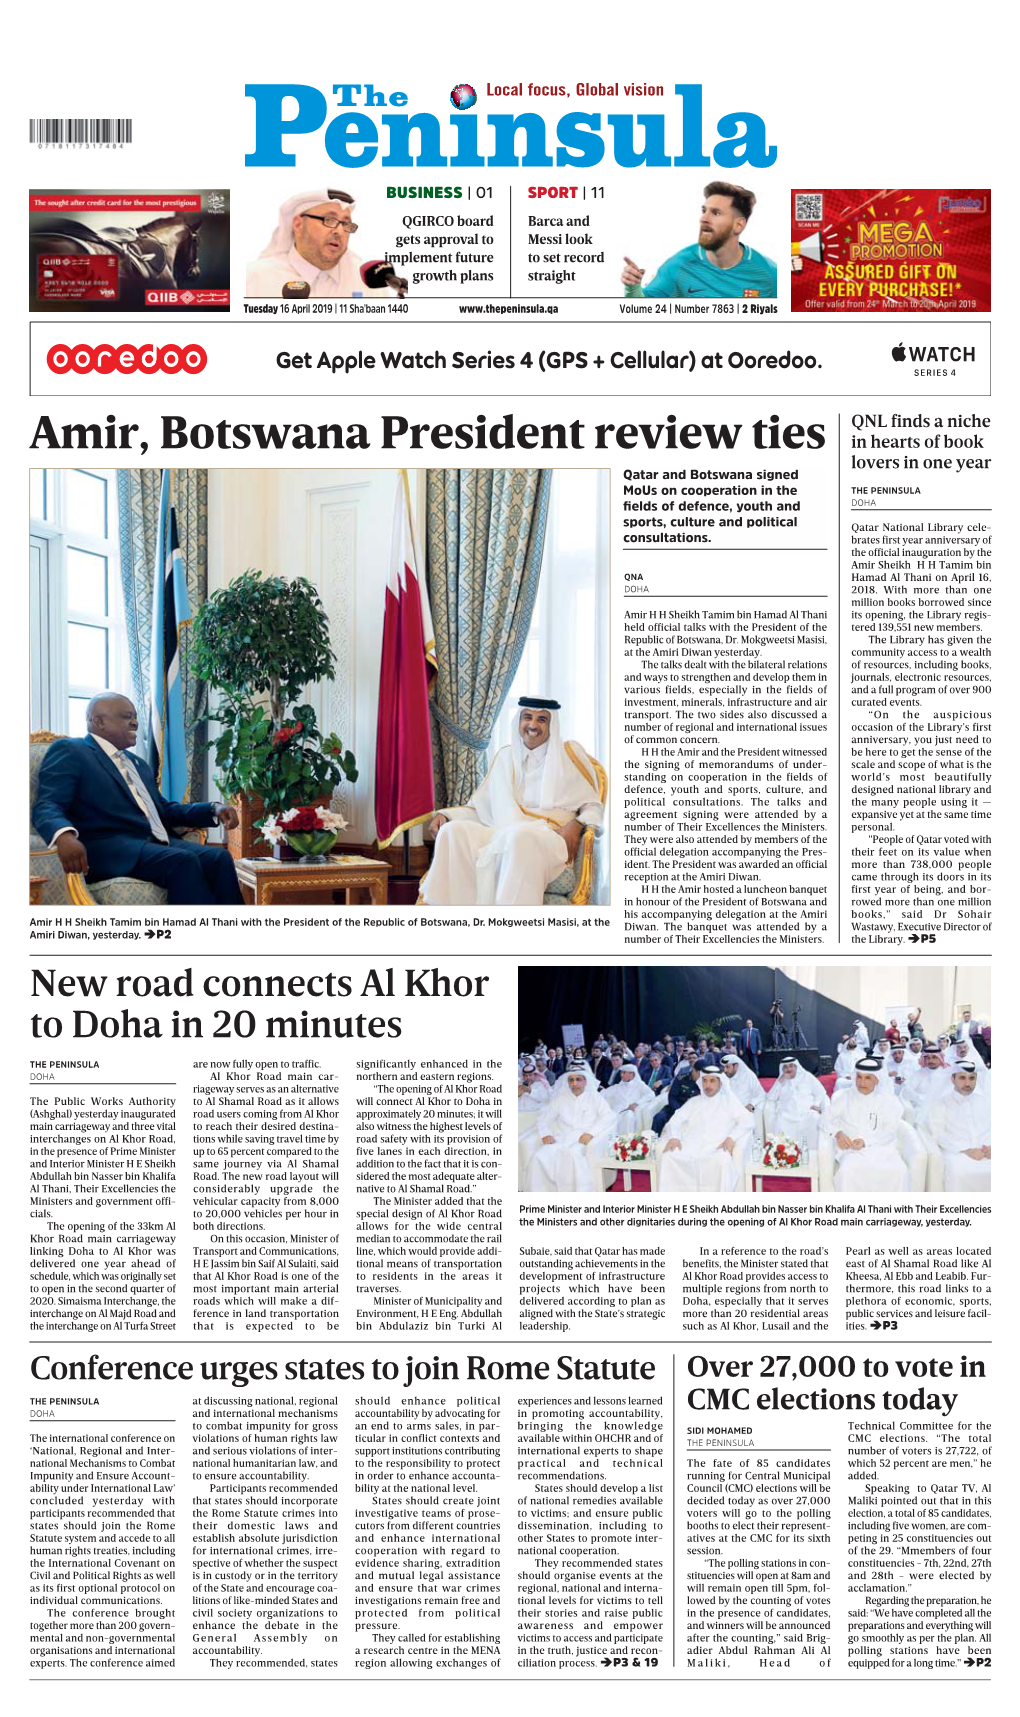 Amir, Botswana President Review Ties